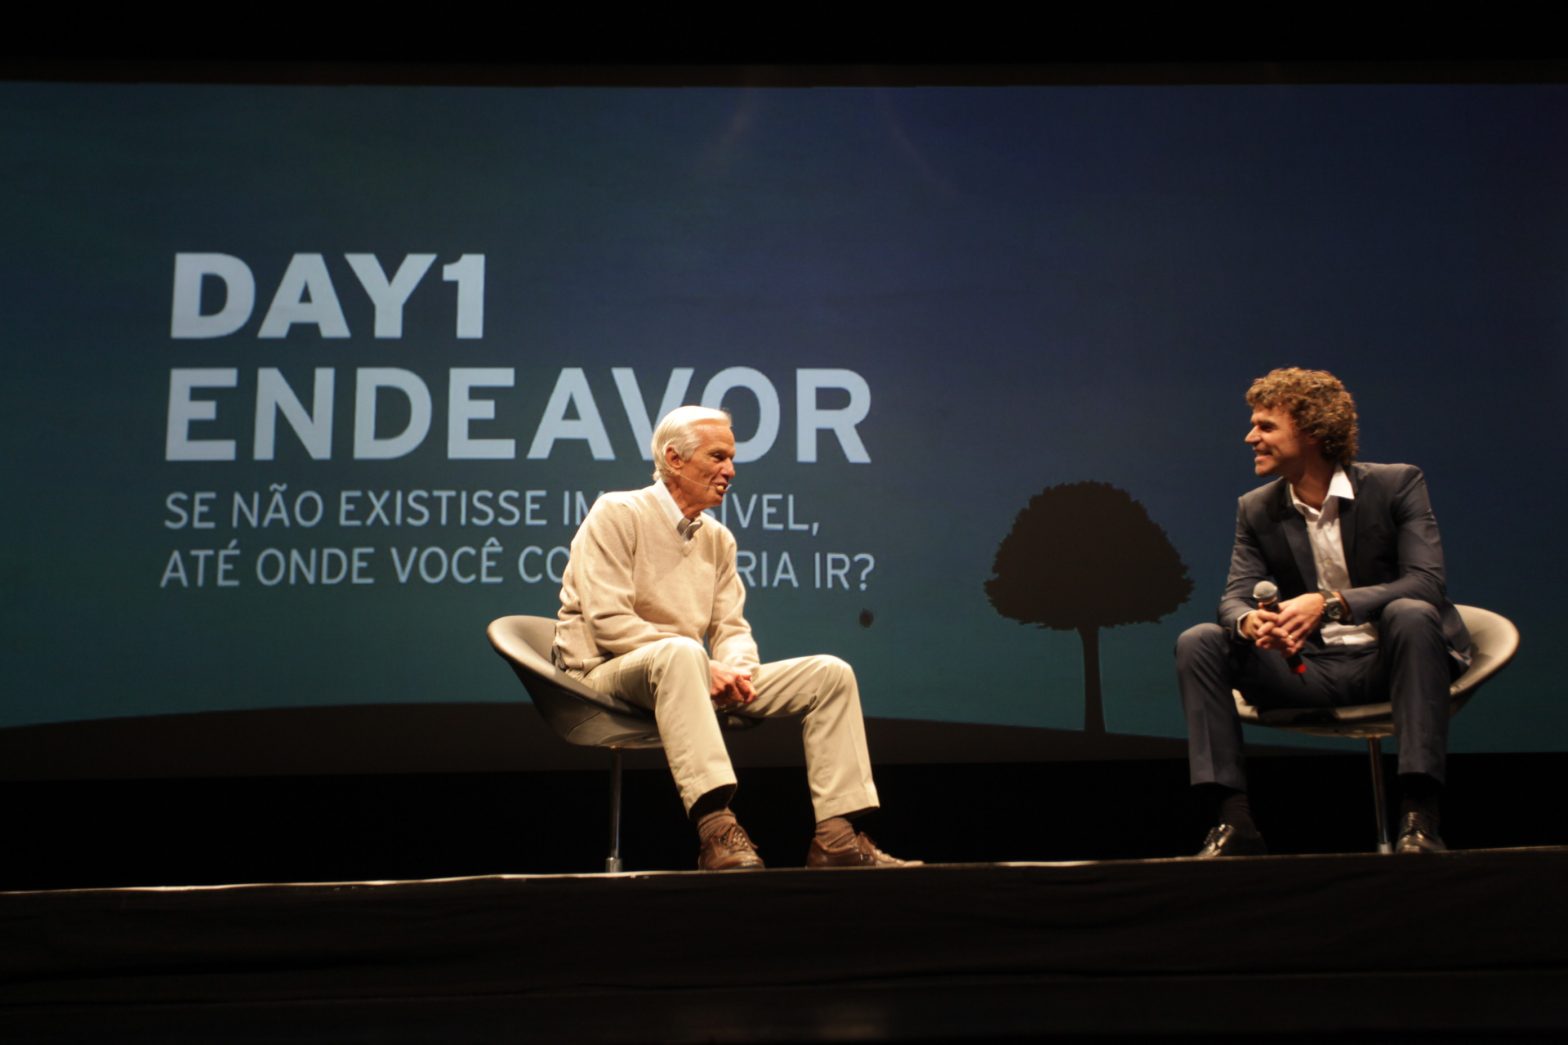 Endeavor realiza Day1 com palestra de Gustavo Kuerten